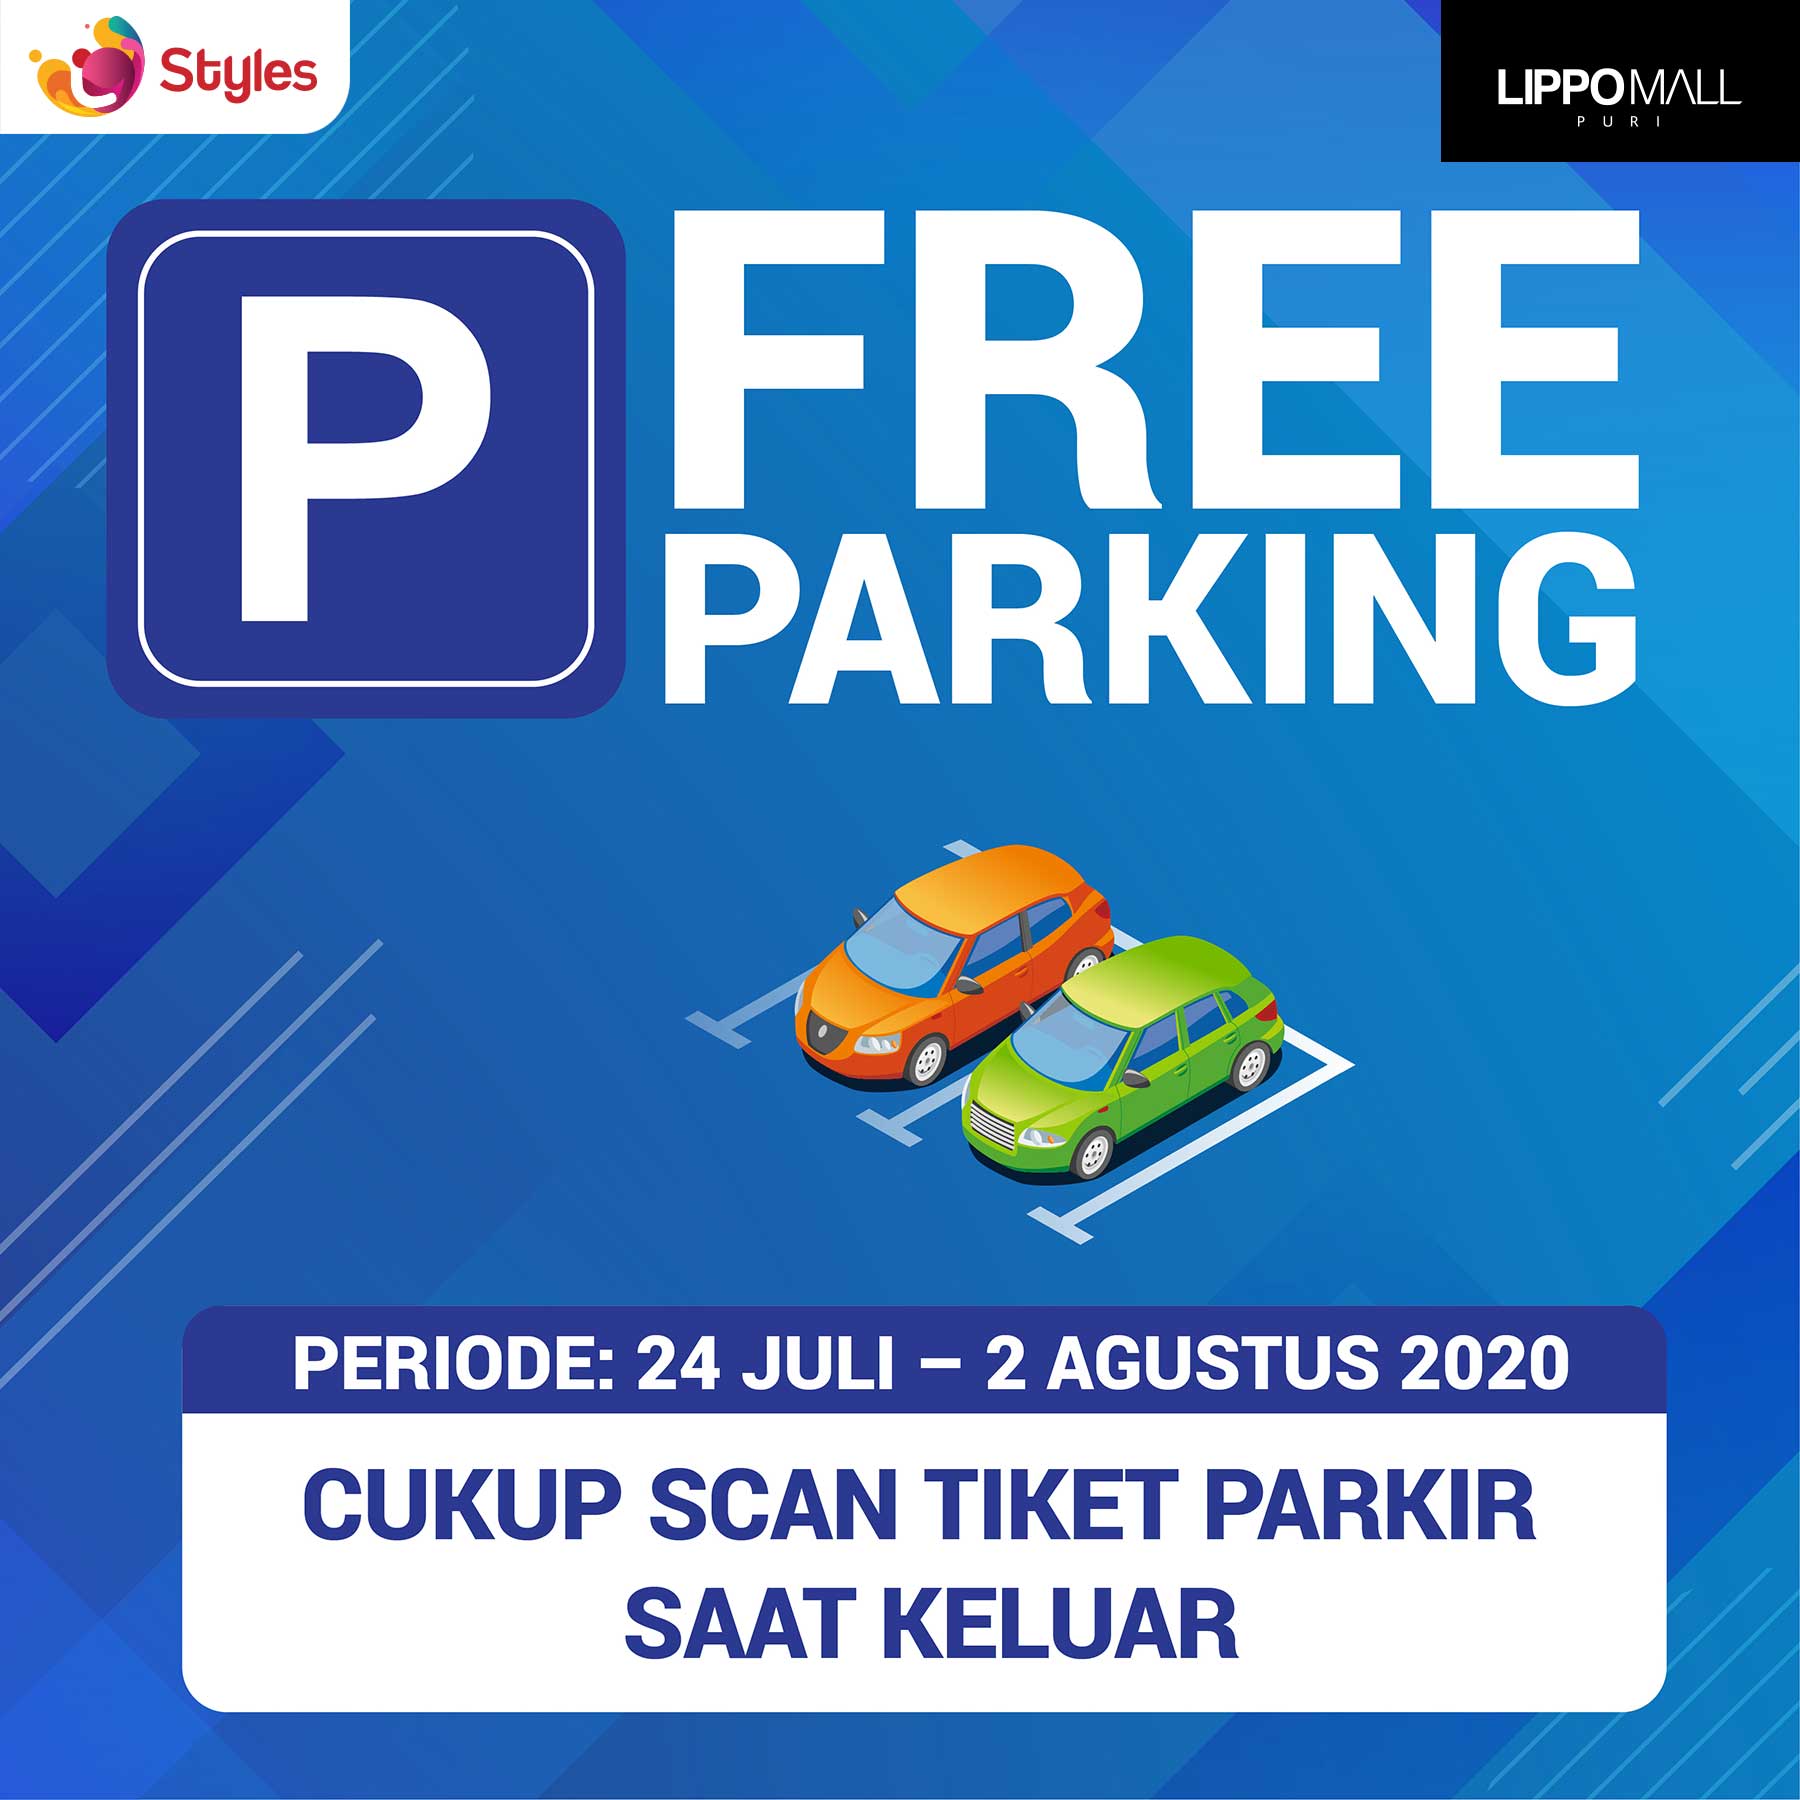 Free Parking Promo in lippo mall puri st. moritz